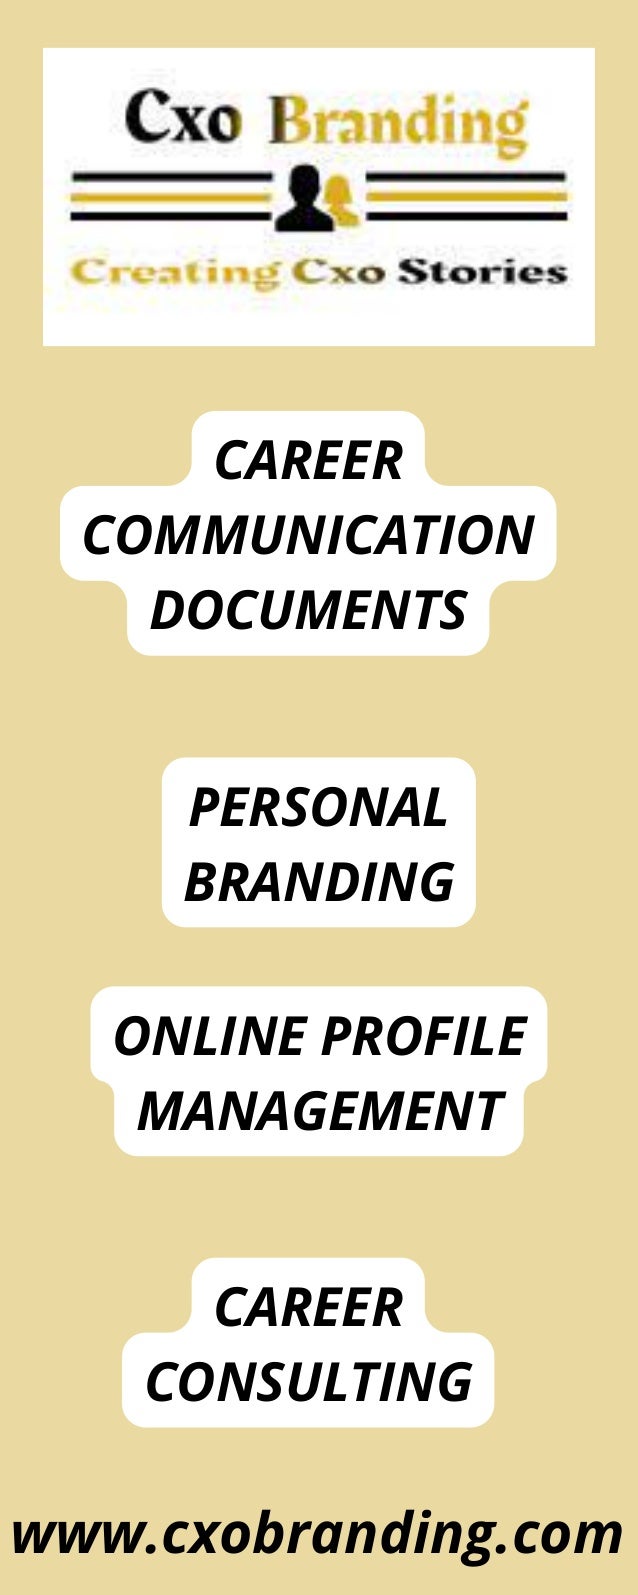 www.cxobranding.com
CAREER
COMMUNICATION
DOCUMENTS
PERSONAL
BRANDING
ONLINE PROFILE
MANAGEMENT
CAREER
CONSULTING
 